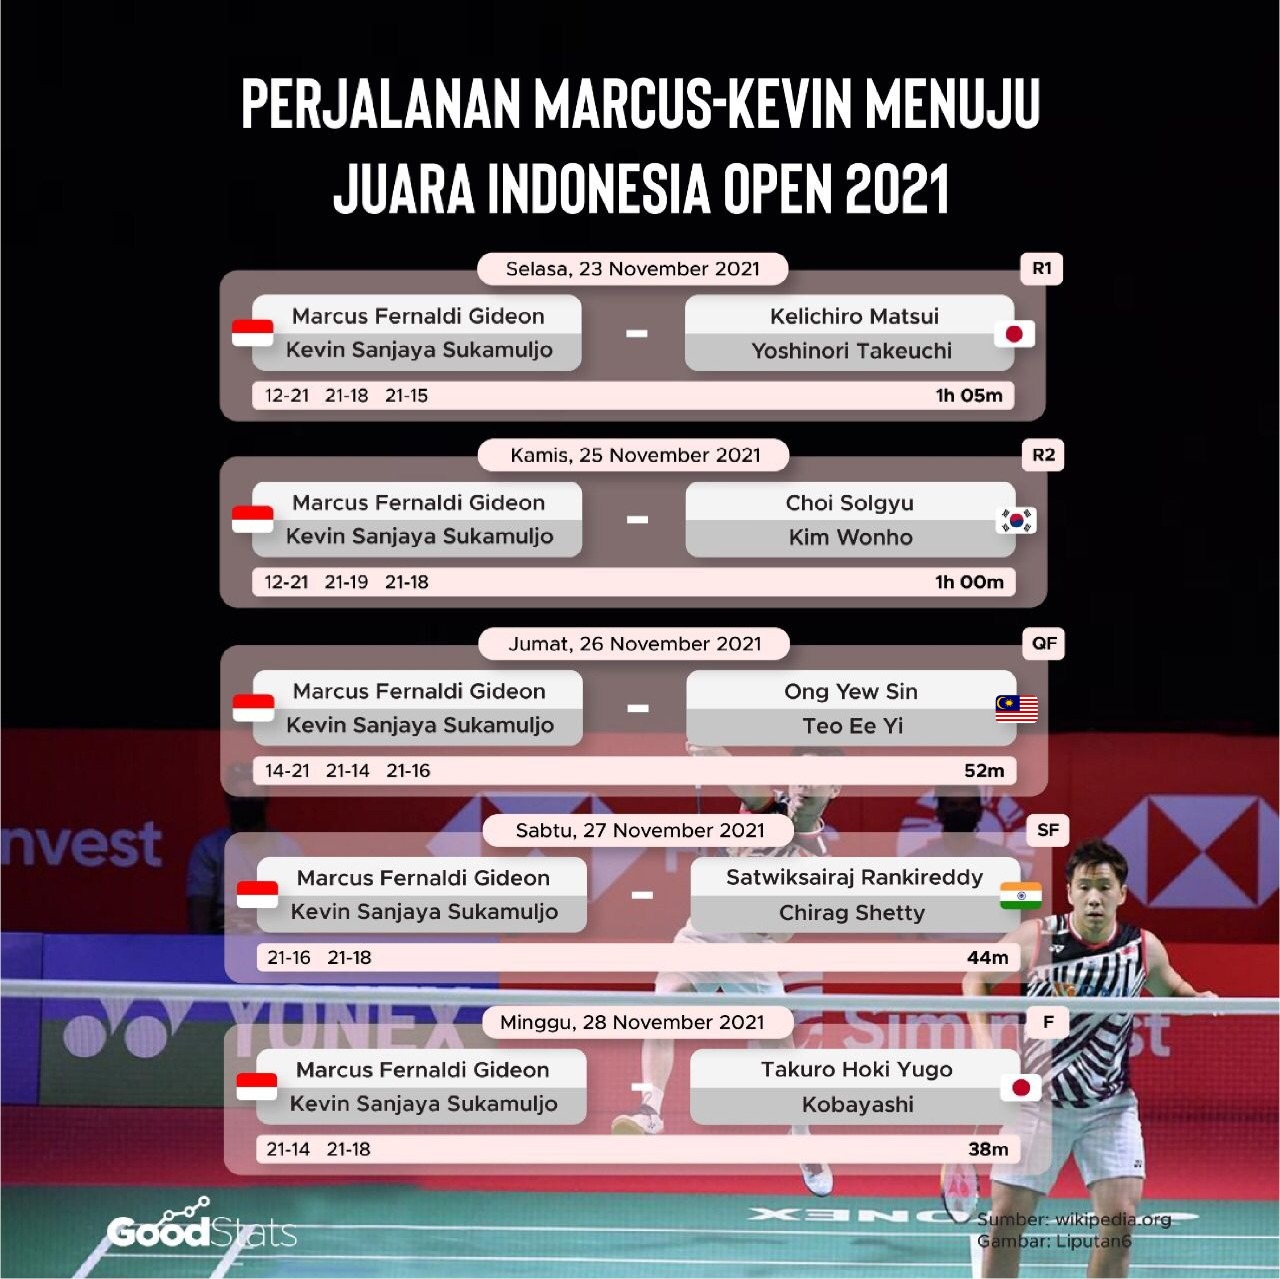 Perjalanan Marcus-Kevin menuju podium Indonesia Open 2021 | GoodStats